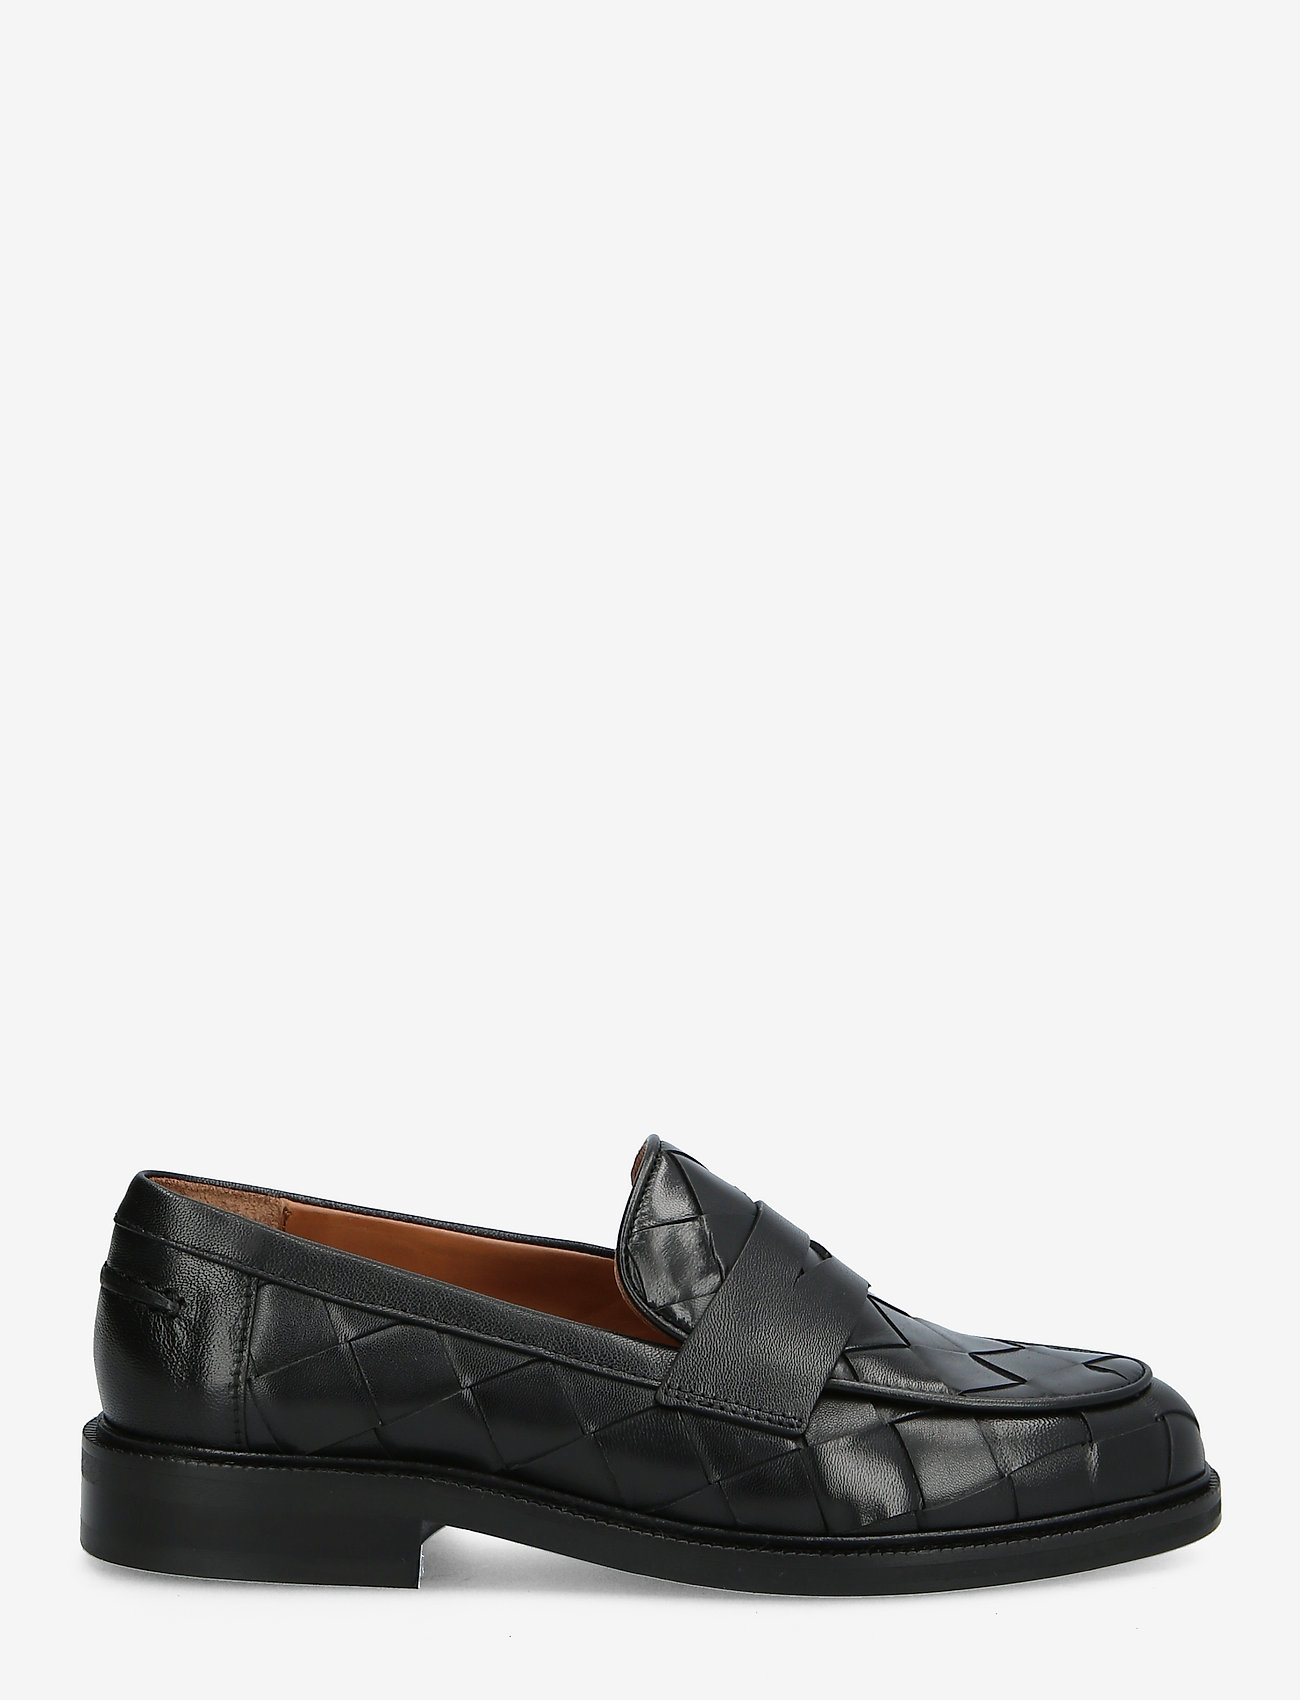 Billi Bi - Shoes - geburtstagsgeschenke - black calf 80 - 1